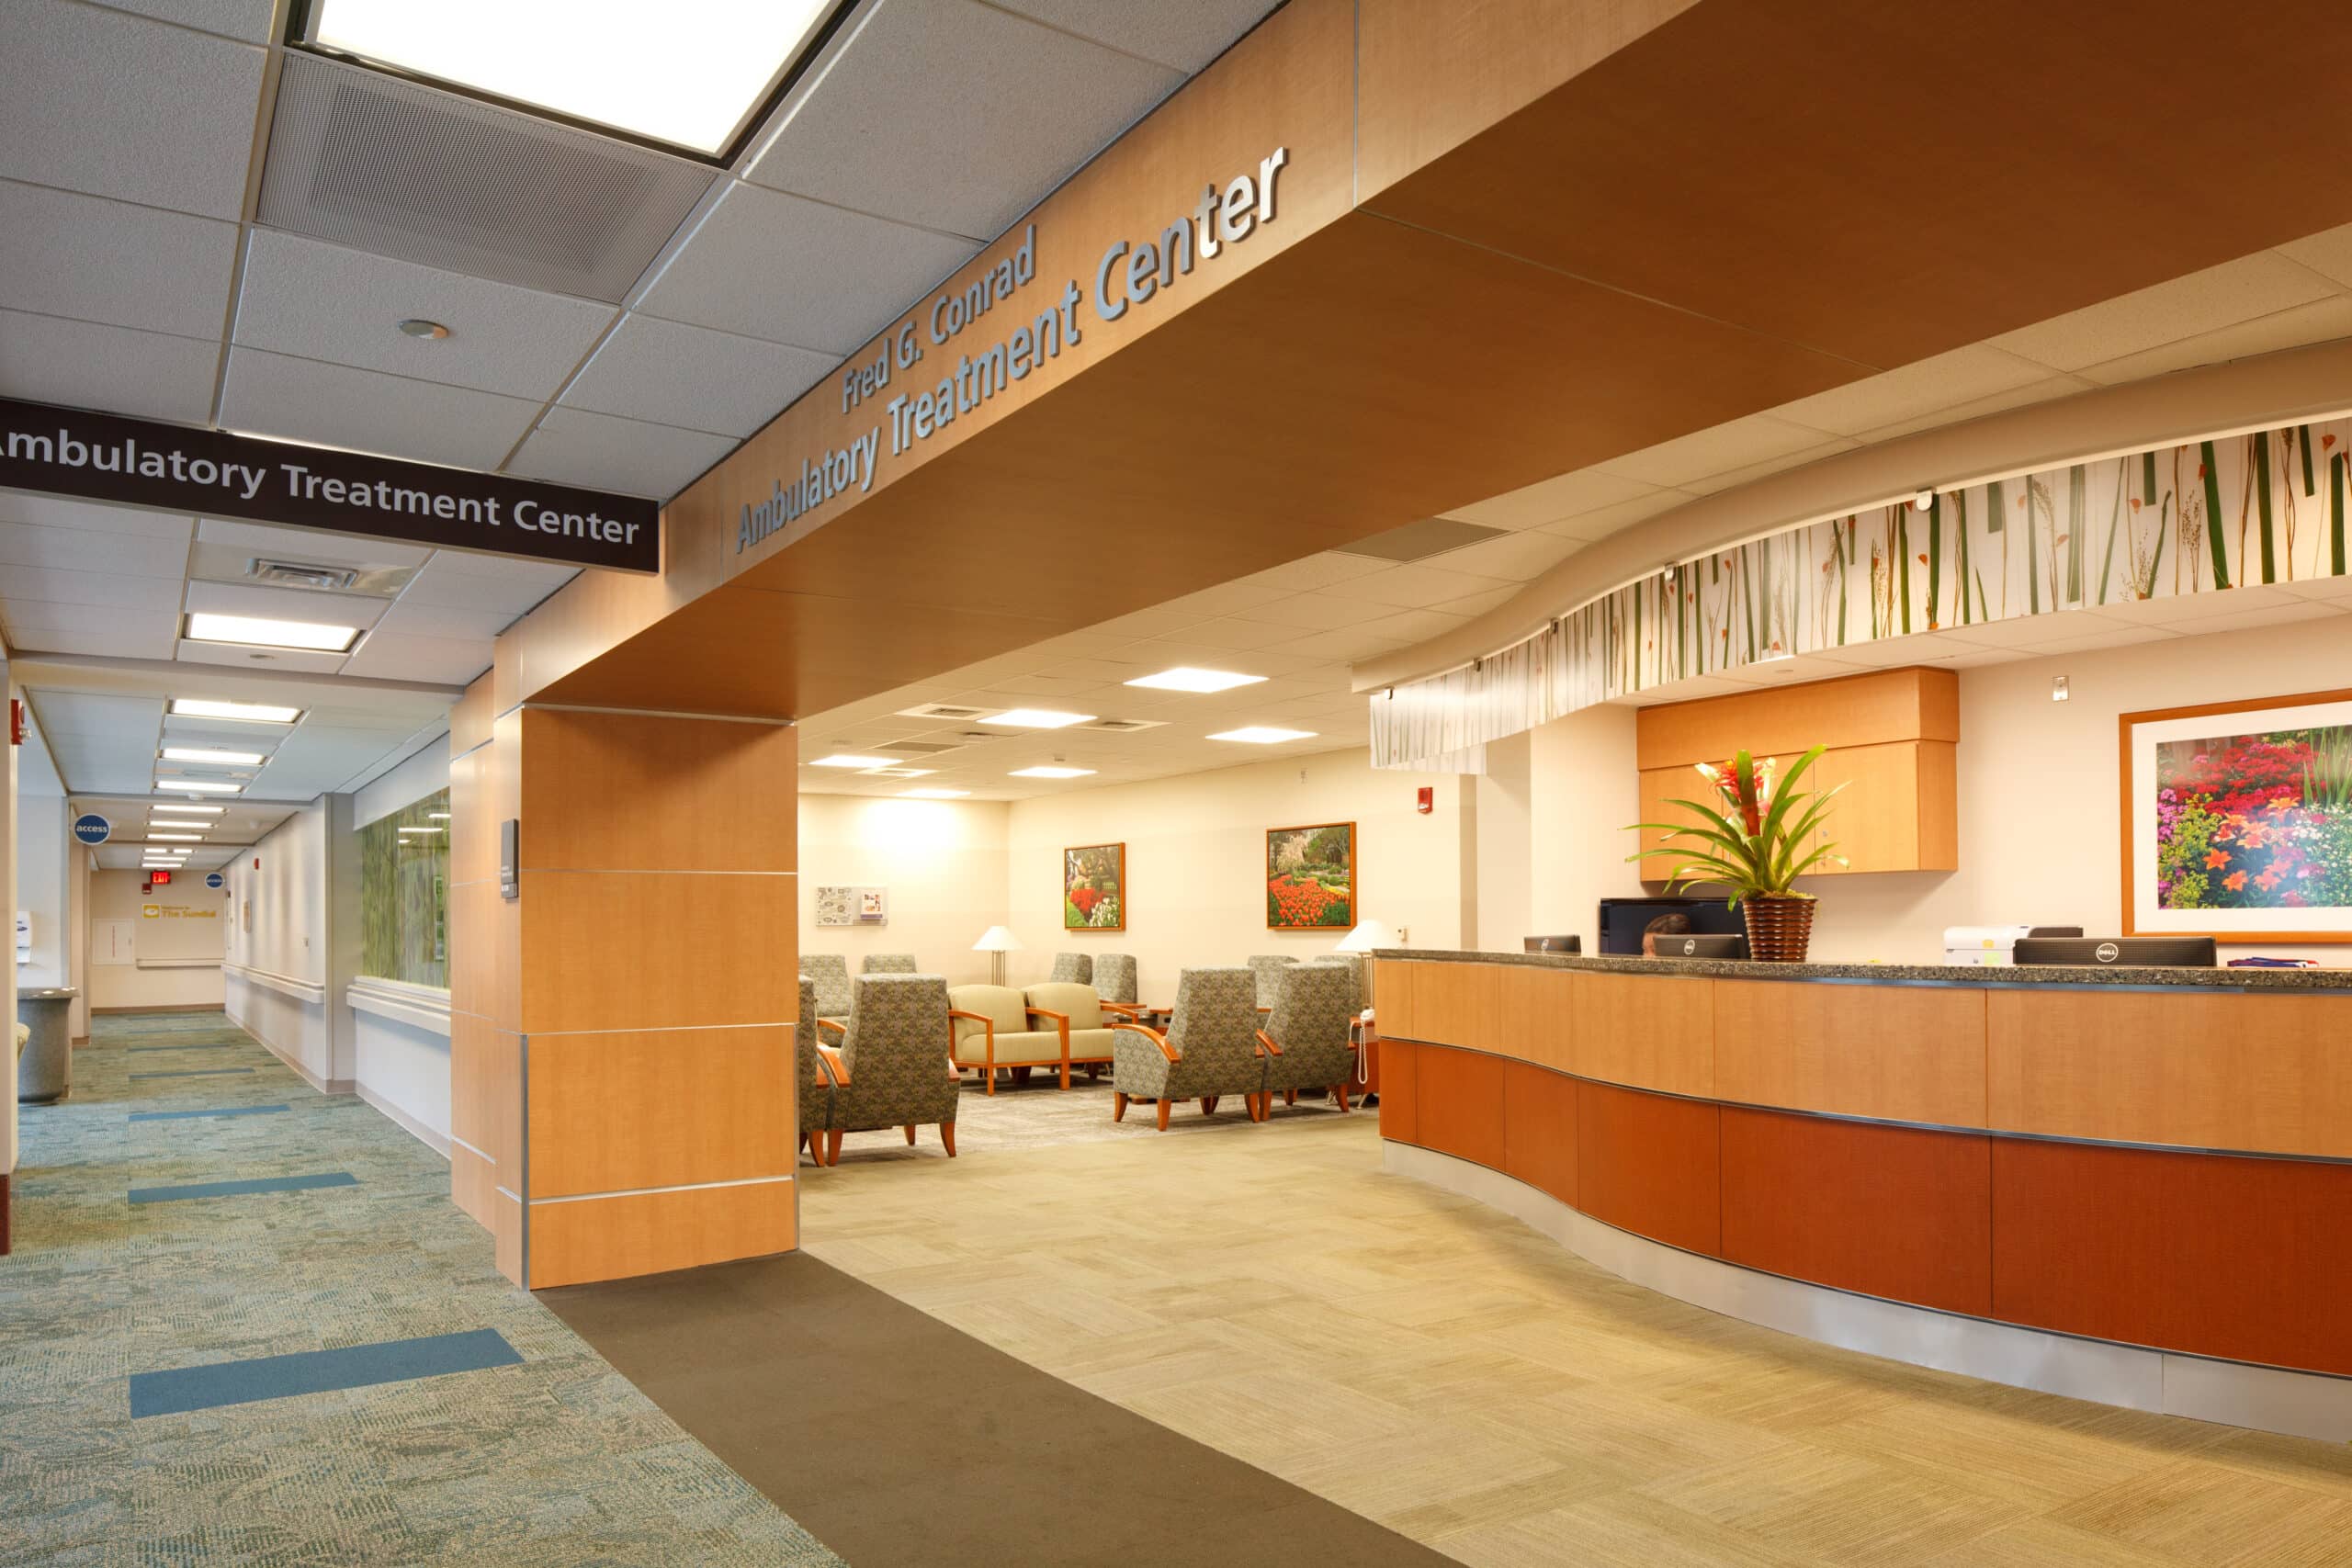 MD Anderson ambulatory treatment center waiting area